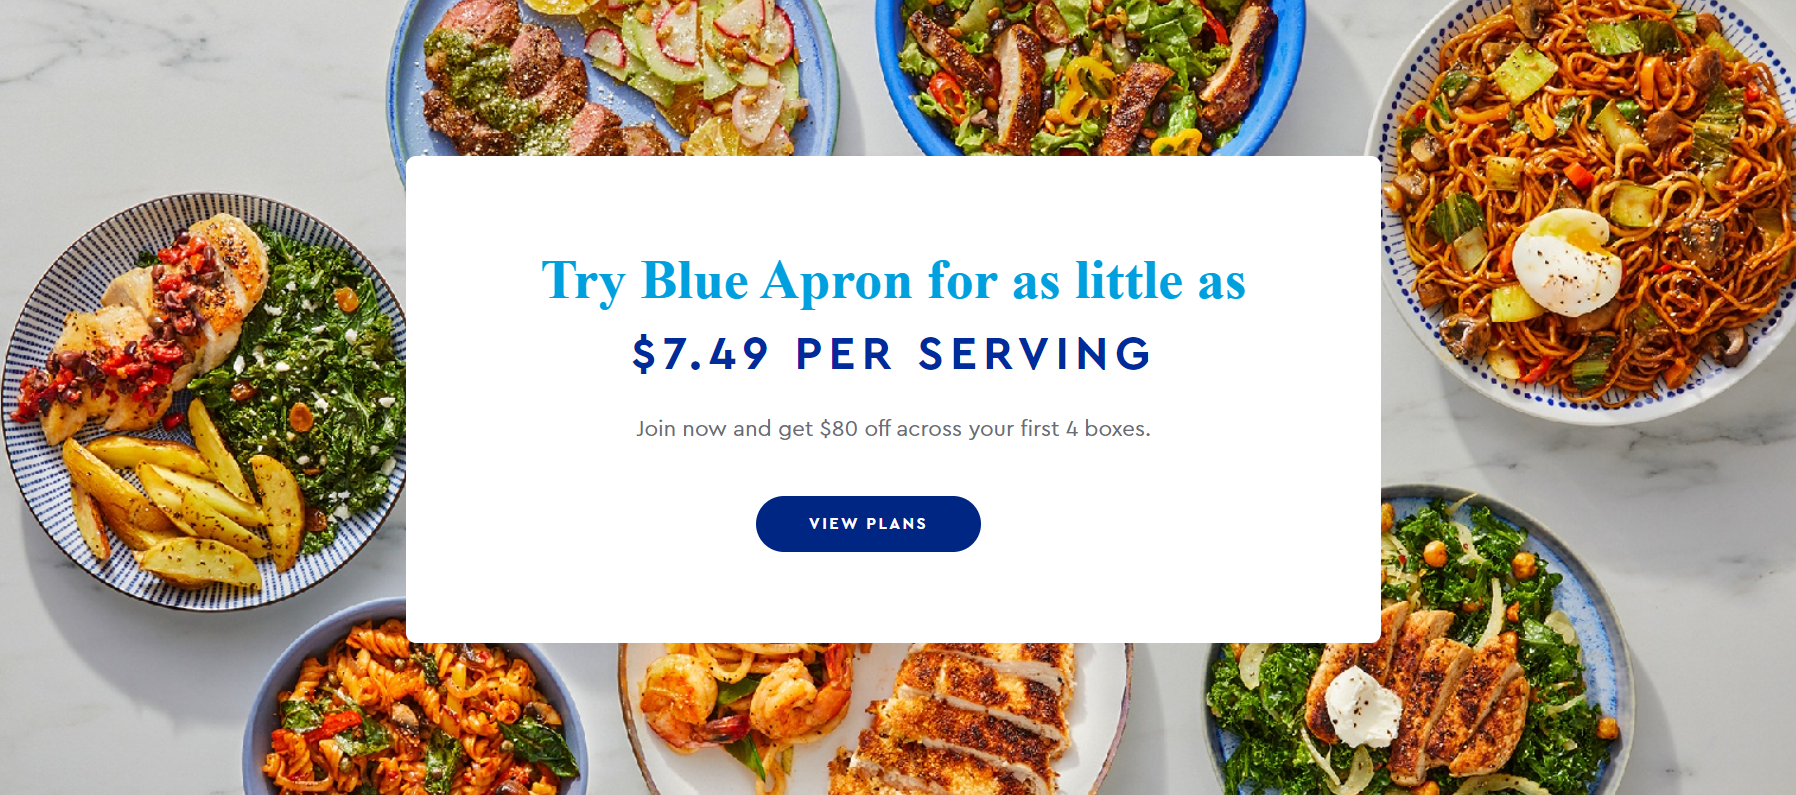 blue apron coupons 2020